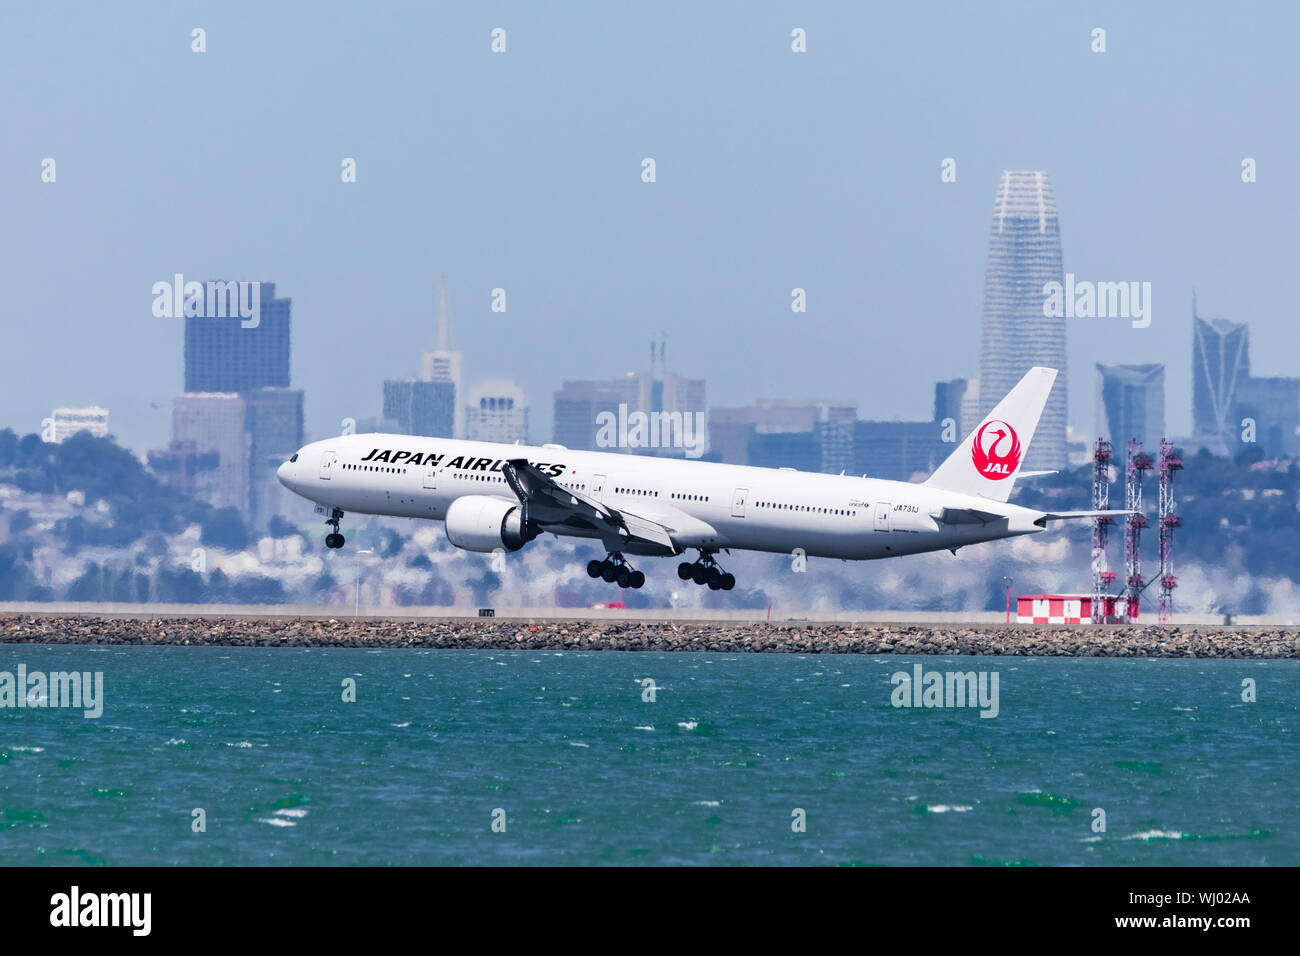 September 1, 2019 Burlingame / CA / USA - Japan Airlines aircraft landing at San Francisco International Airport; Downtown San Francisco skyline visib Stock Photo